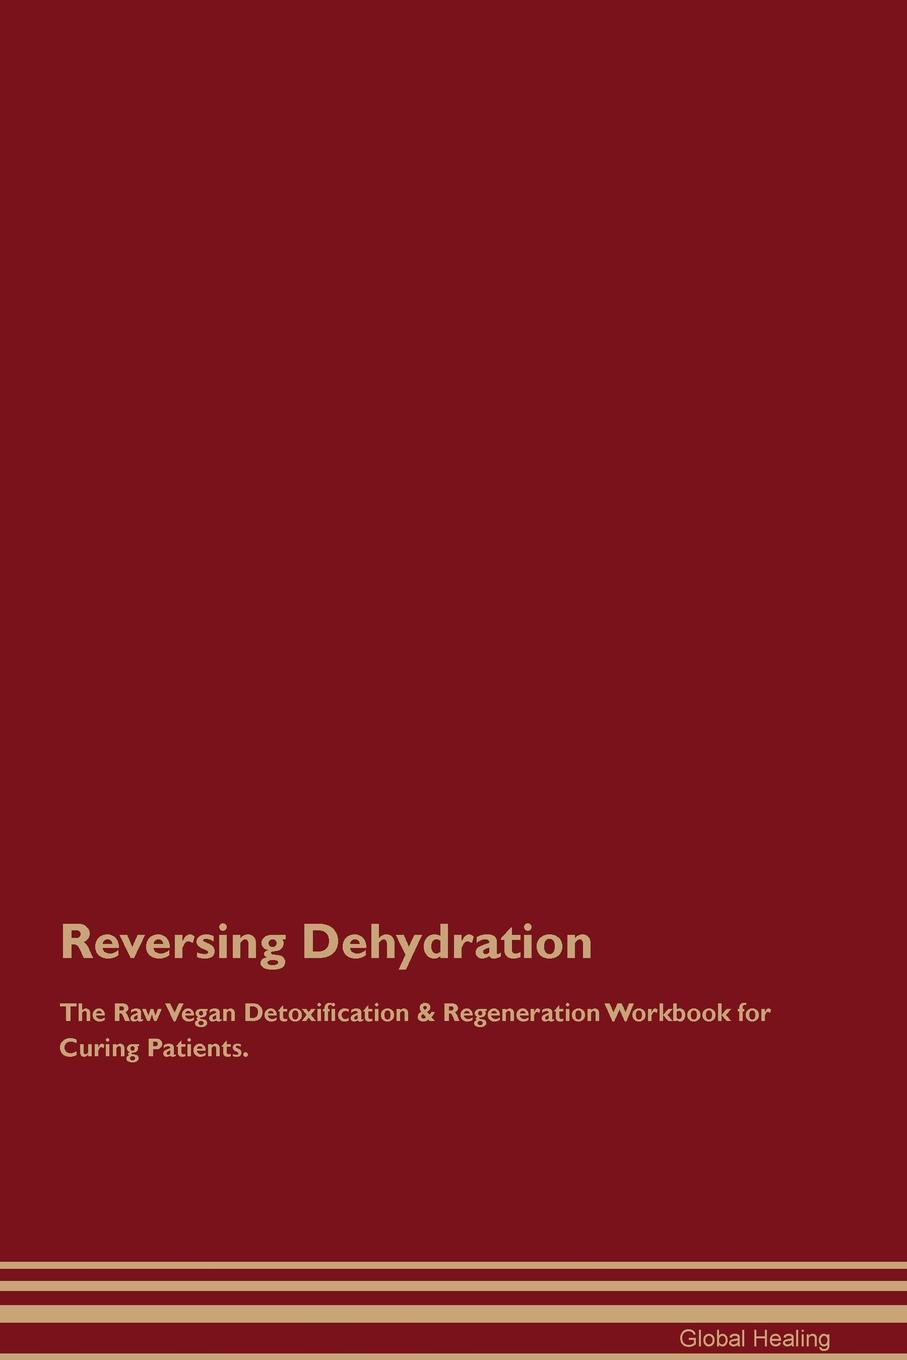 Reversing Dehydration The Raw Vegan Detoxification & Regeneration Workbook for Curing Patients